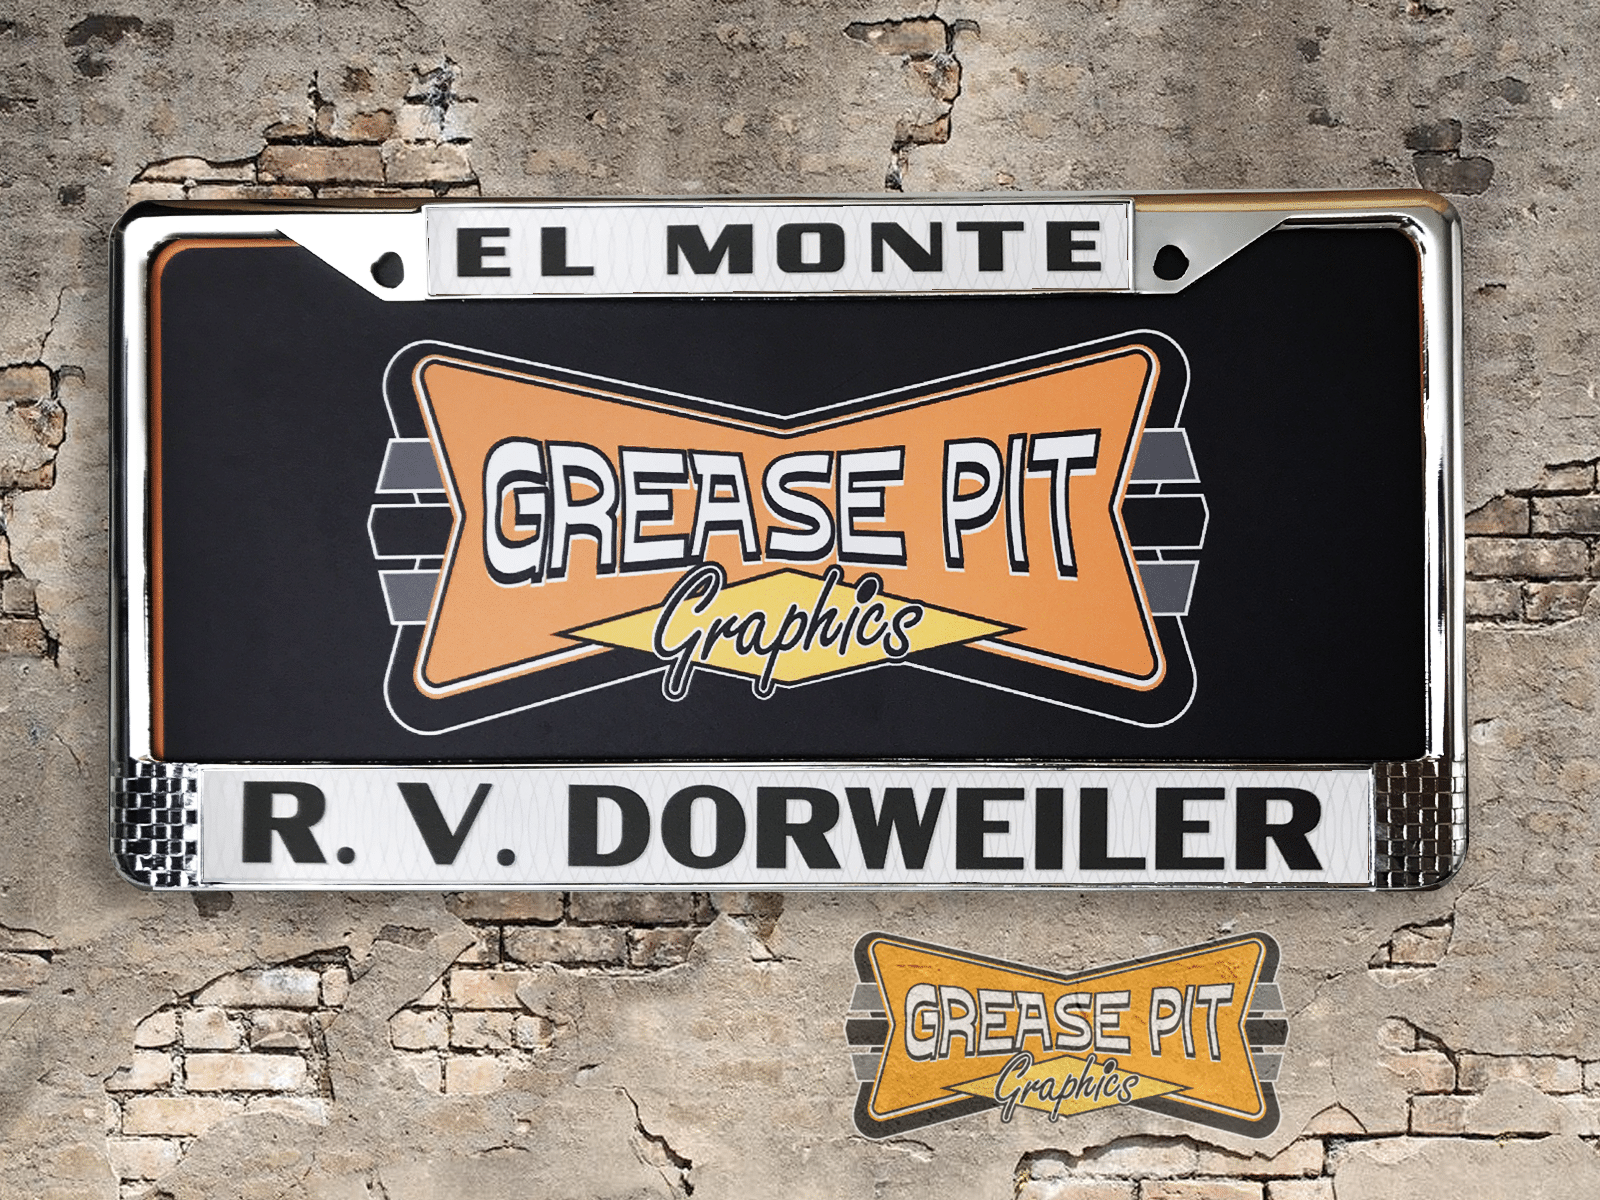 RV Dorweiler Chevrolet El Monte License Plate Frame Tribute